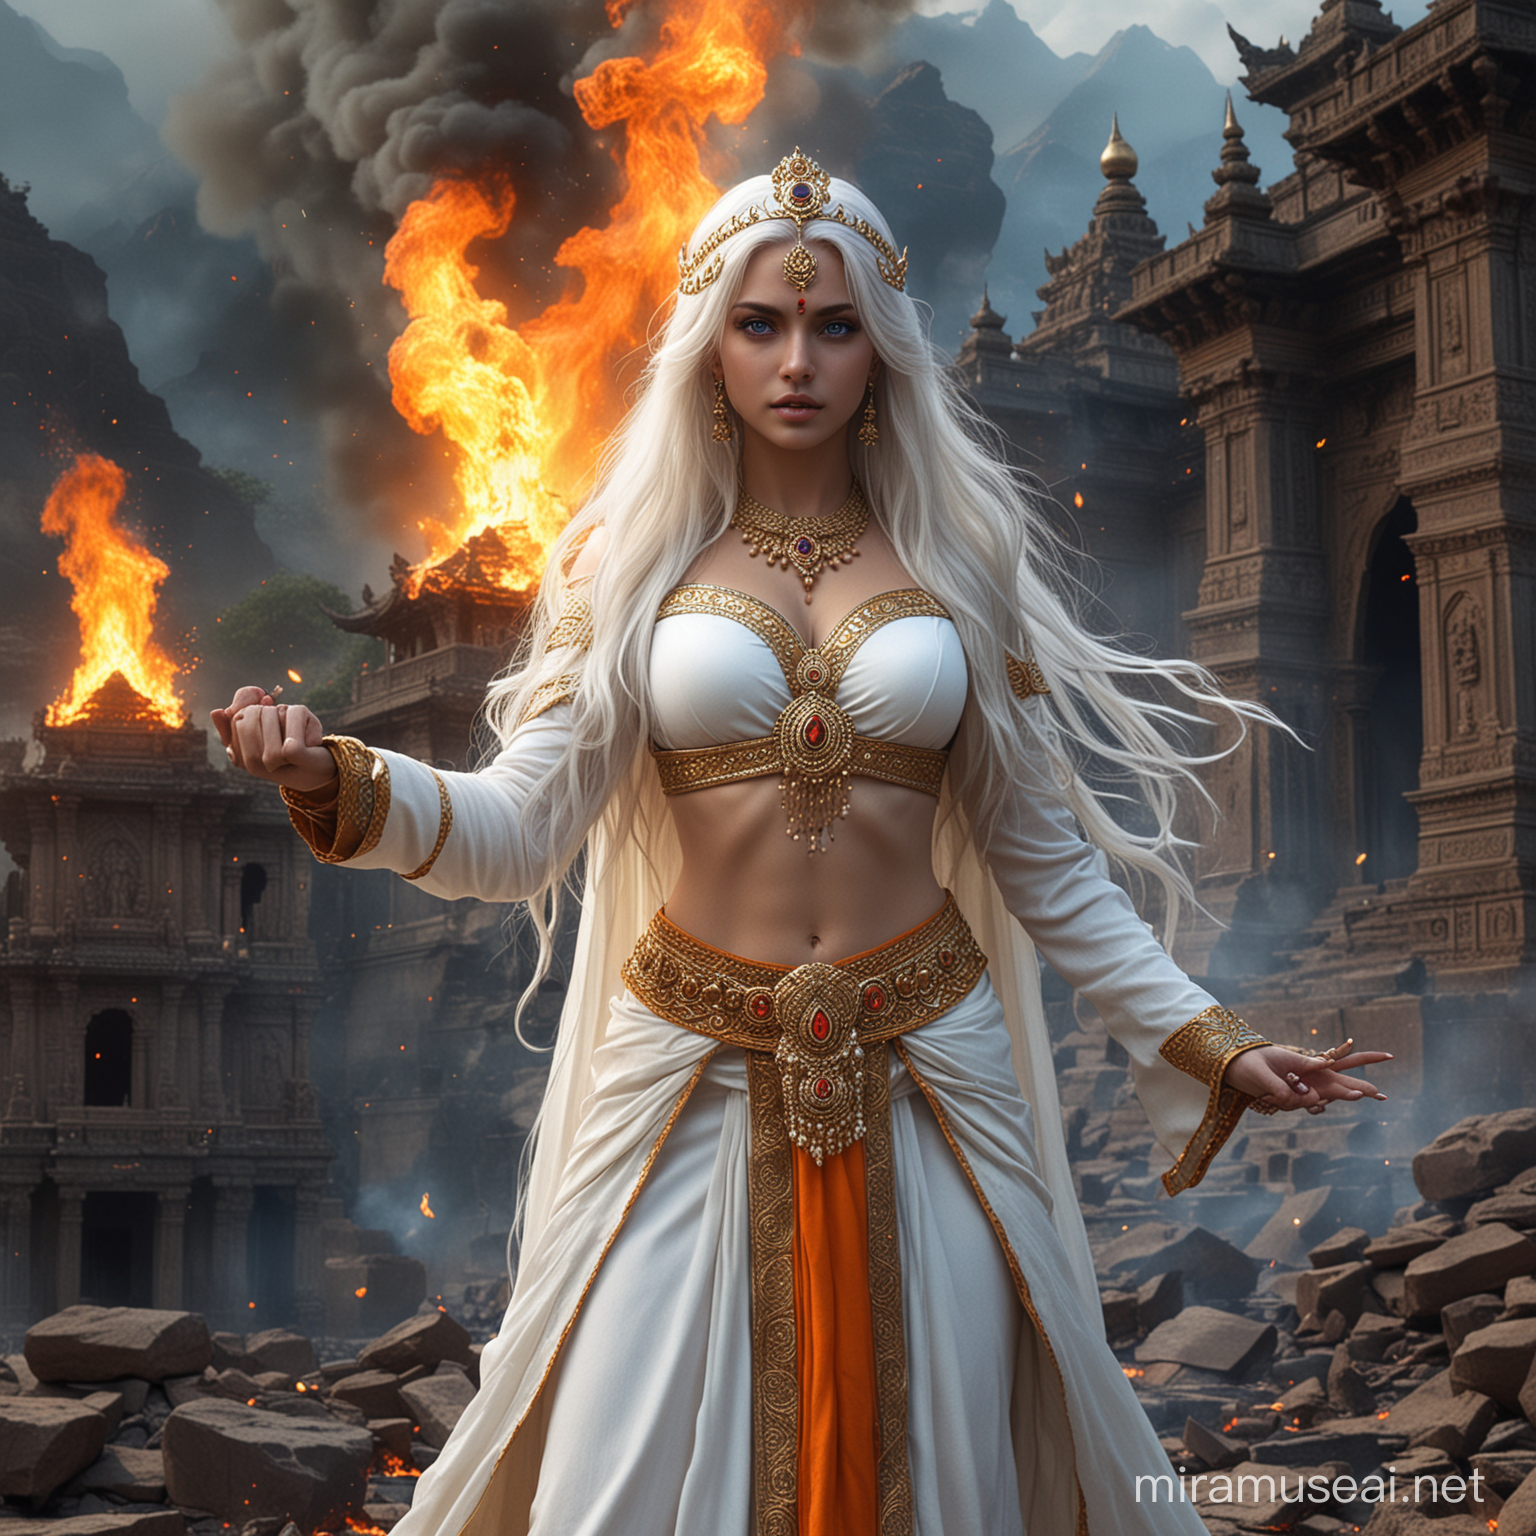 Powerful Hindu Empress Kayashiel Commanding Fire in Battle